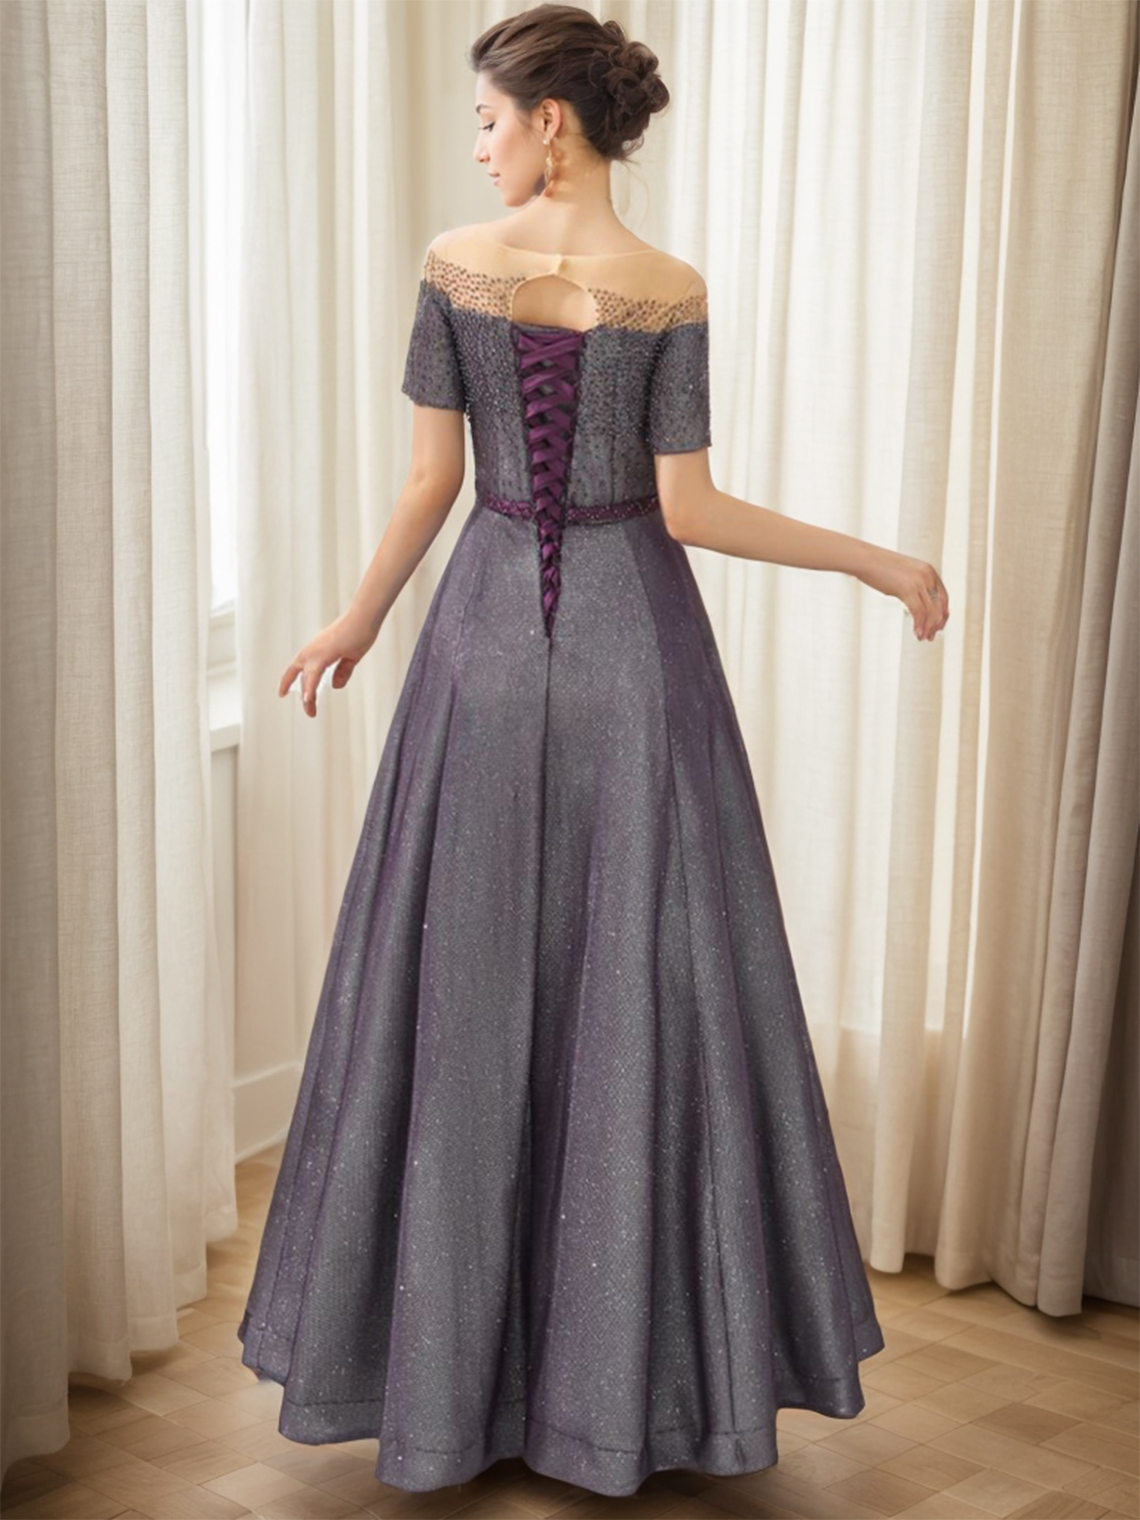 A-Line Evening Dress Jewel Neck Short Sleeves Floor Length Prom Dress